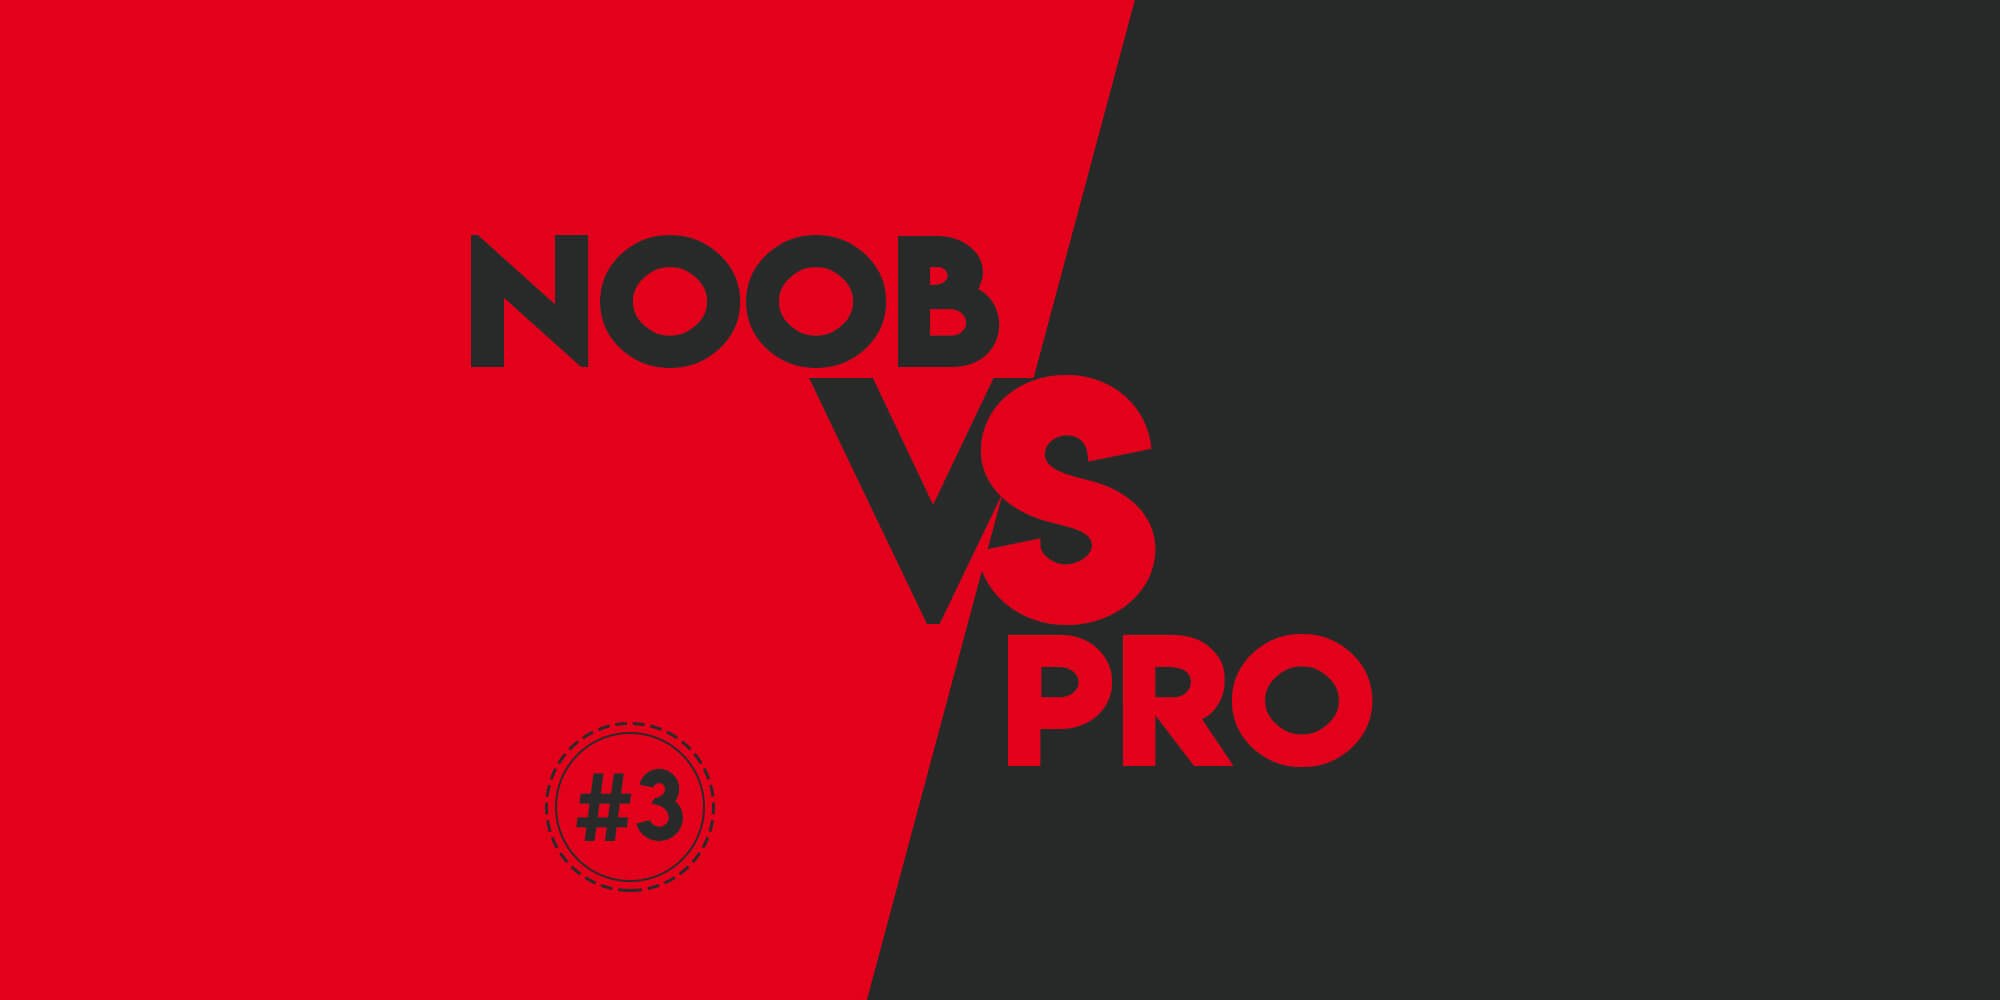 Noob vs Pro #3 — высота отрыва мышки (LOD)